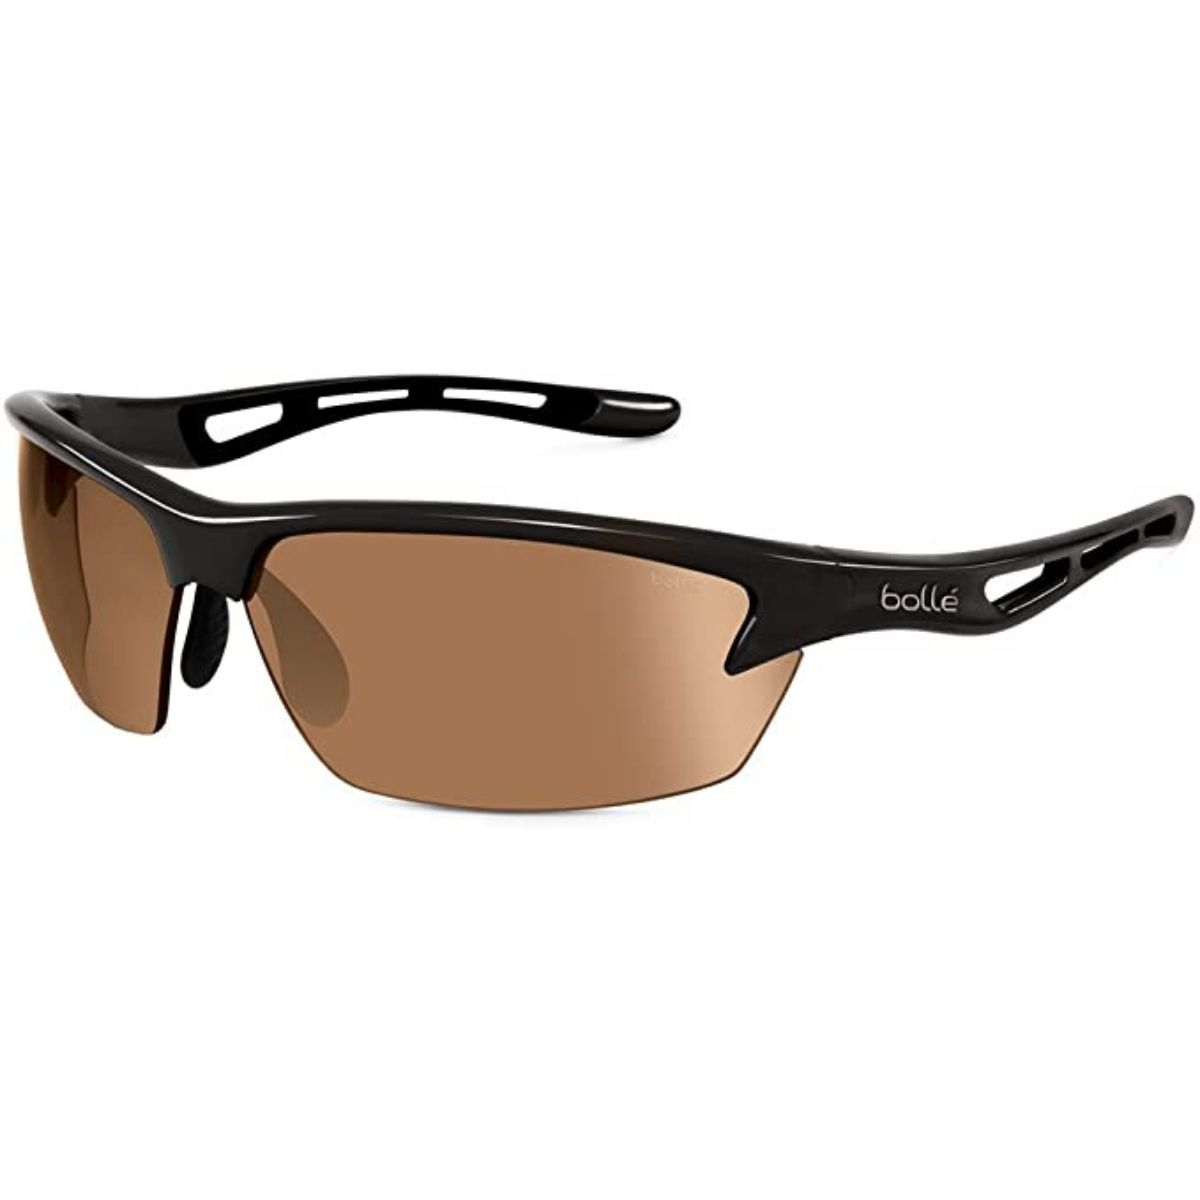 The Best Sunglasses for Tennis Options: Bolle Bolt Sunglasses